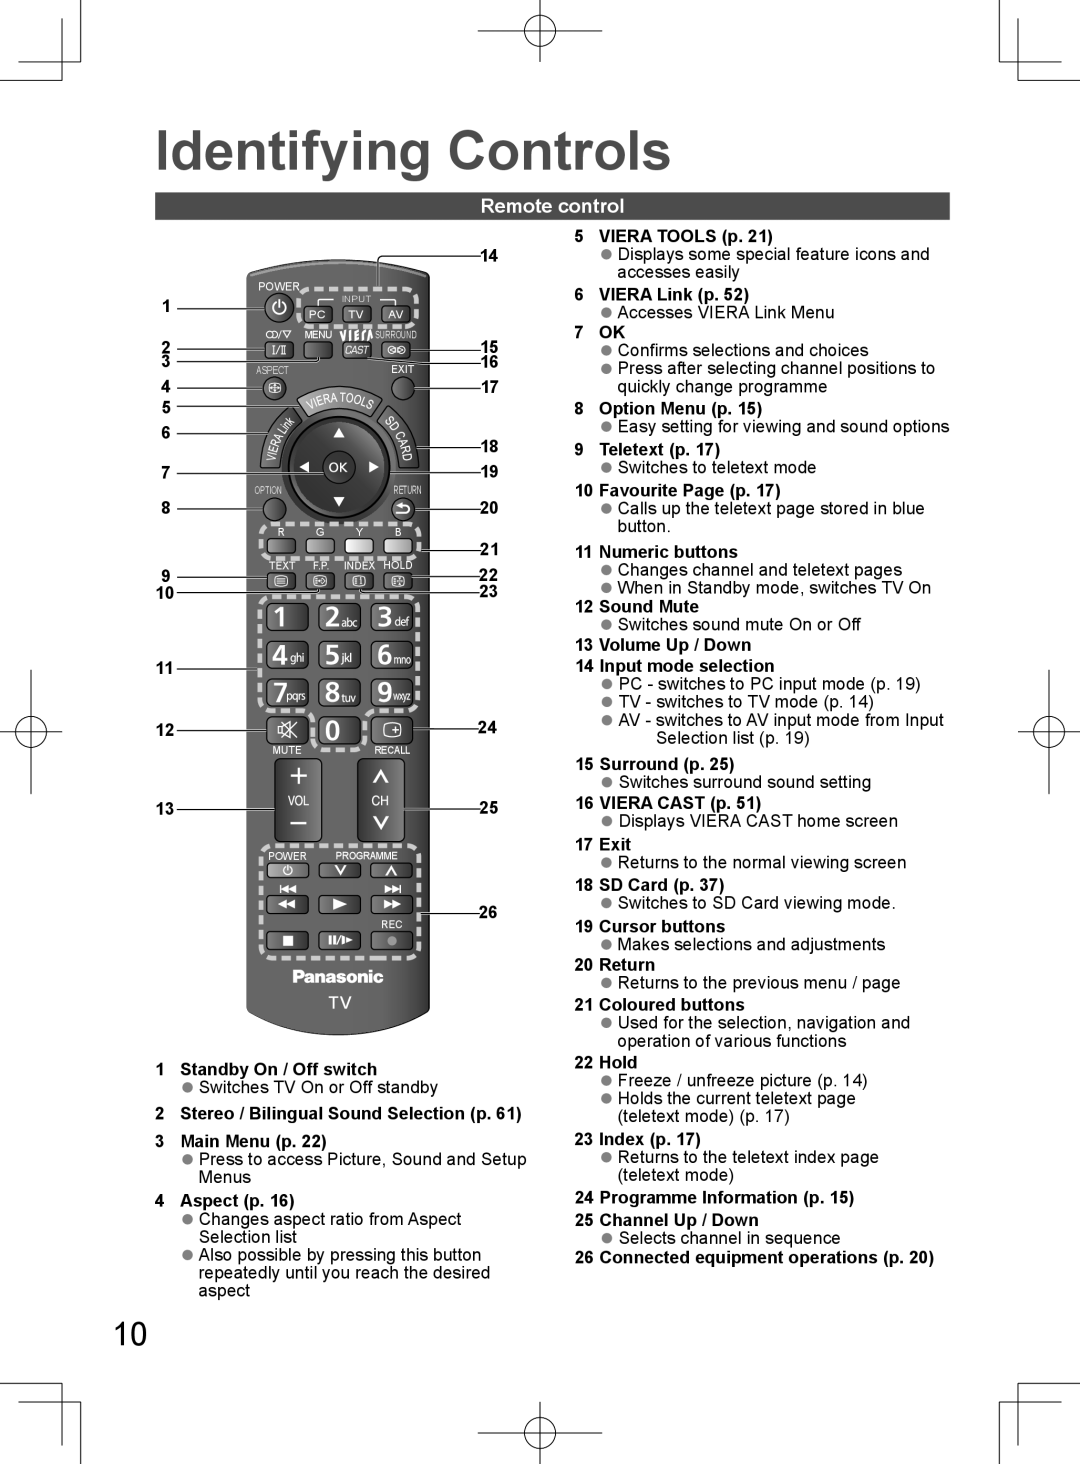 Panasonic TH-L32D25M Identifying Controls, Remote control, VIERA TOOLS p, VIERA Link p, 7 OK, Option Menu p, Teletext p 